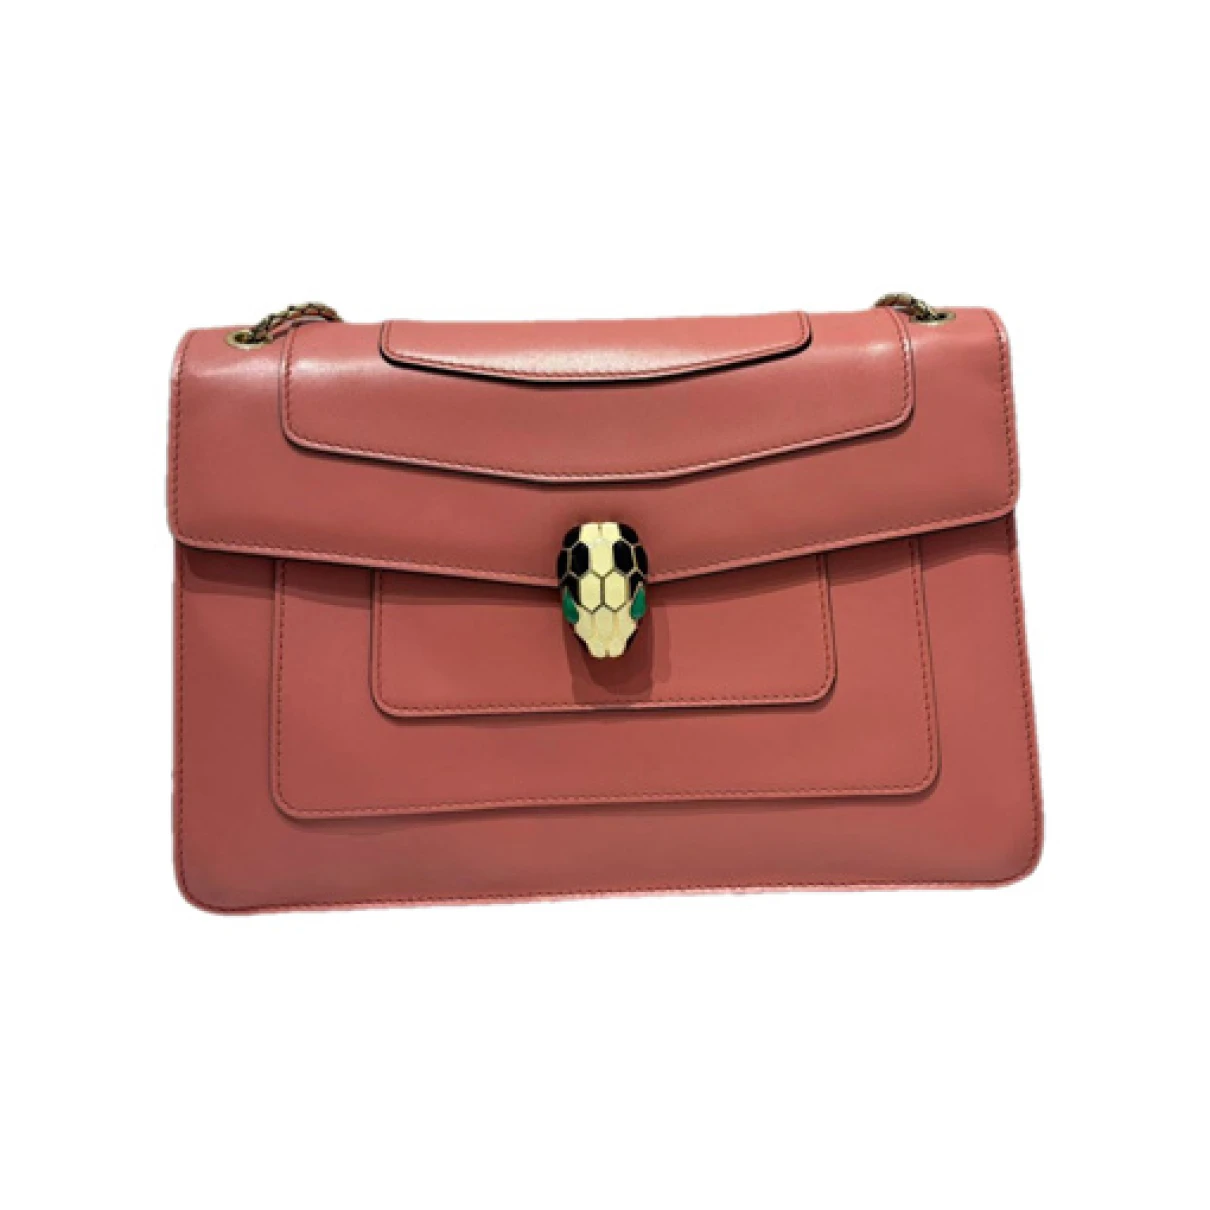 Pre-owned Bvlgari Serpenti Leather Handbag In Pink